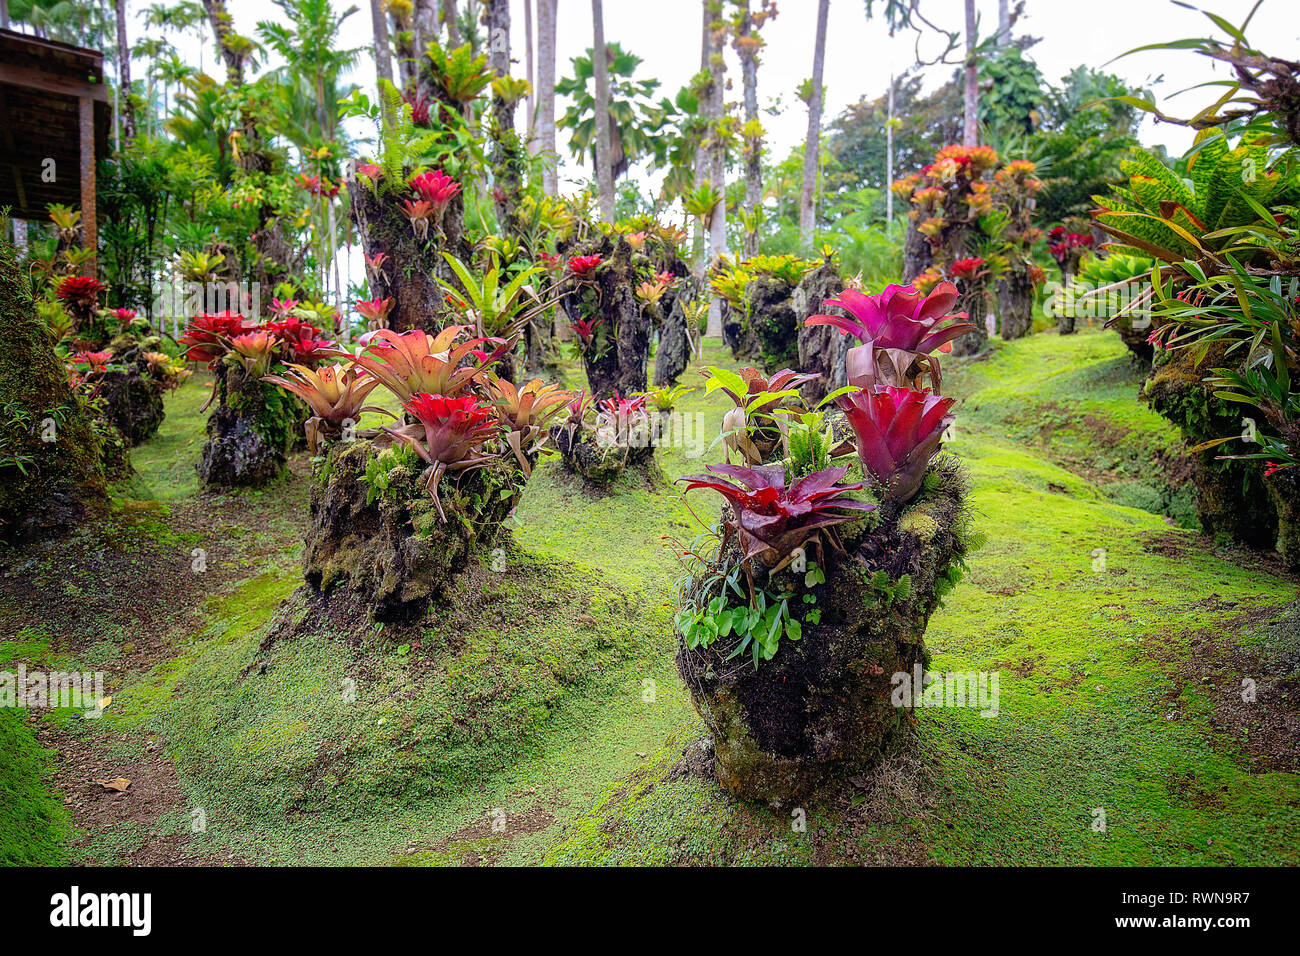 Jardin de Balata tropicale en Martinique. Belle - dans un jardin tropical en Martinique. Banque D'Images